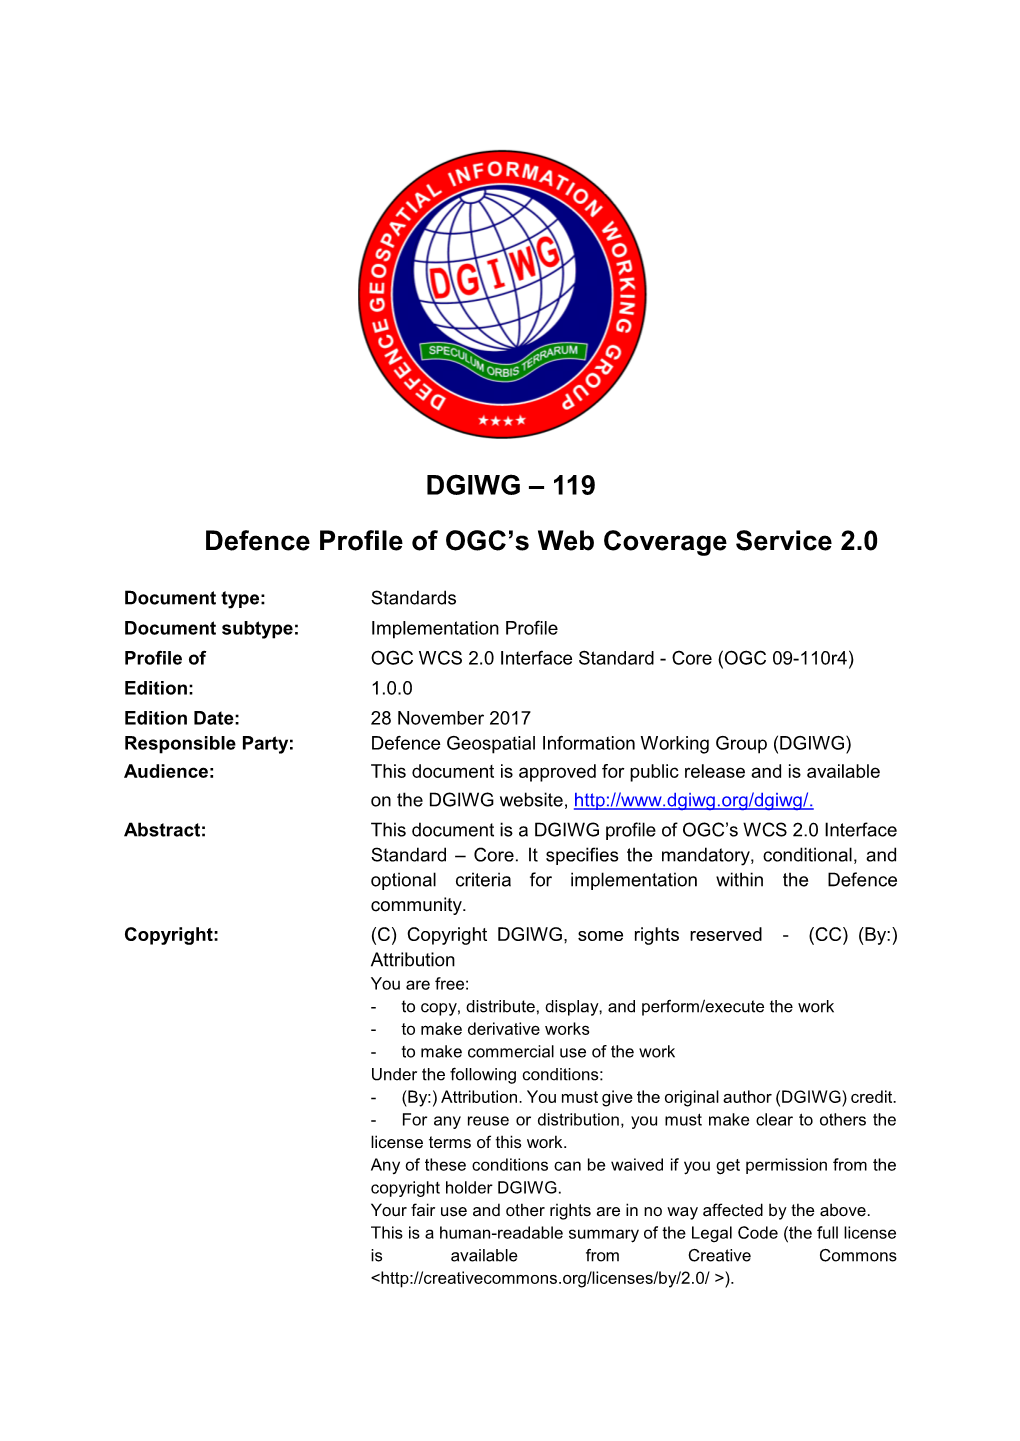 DGIWG – 119 Defence Profile of OGC's Web Coverage Service